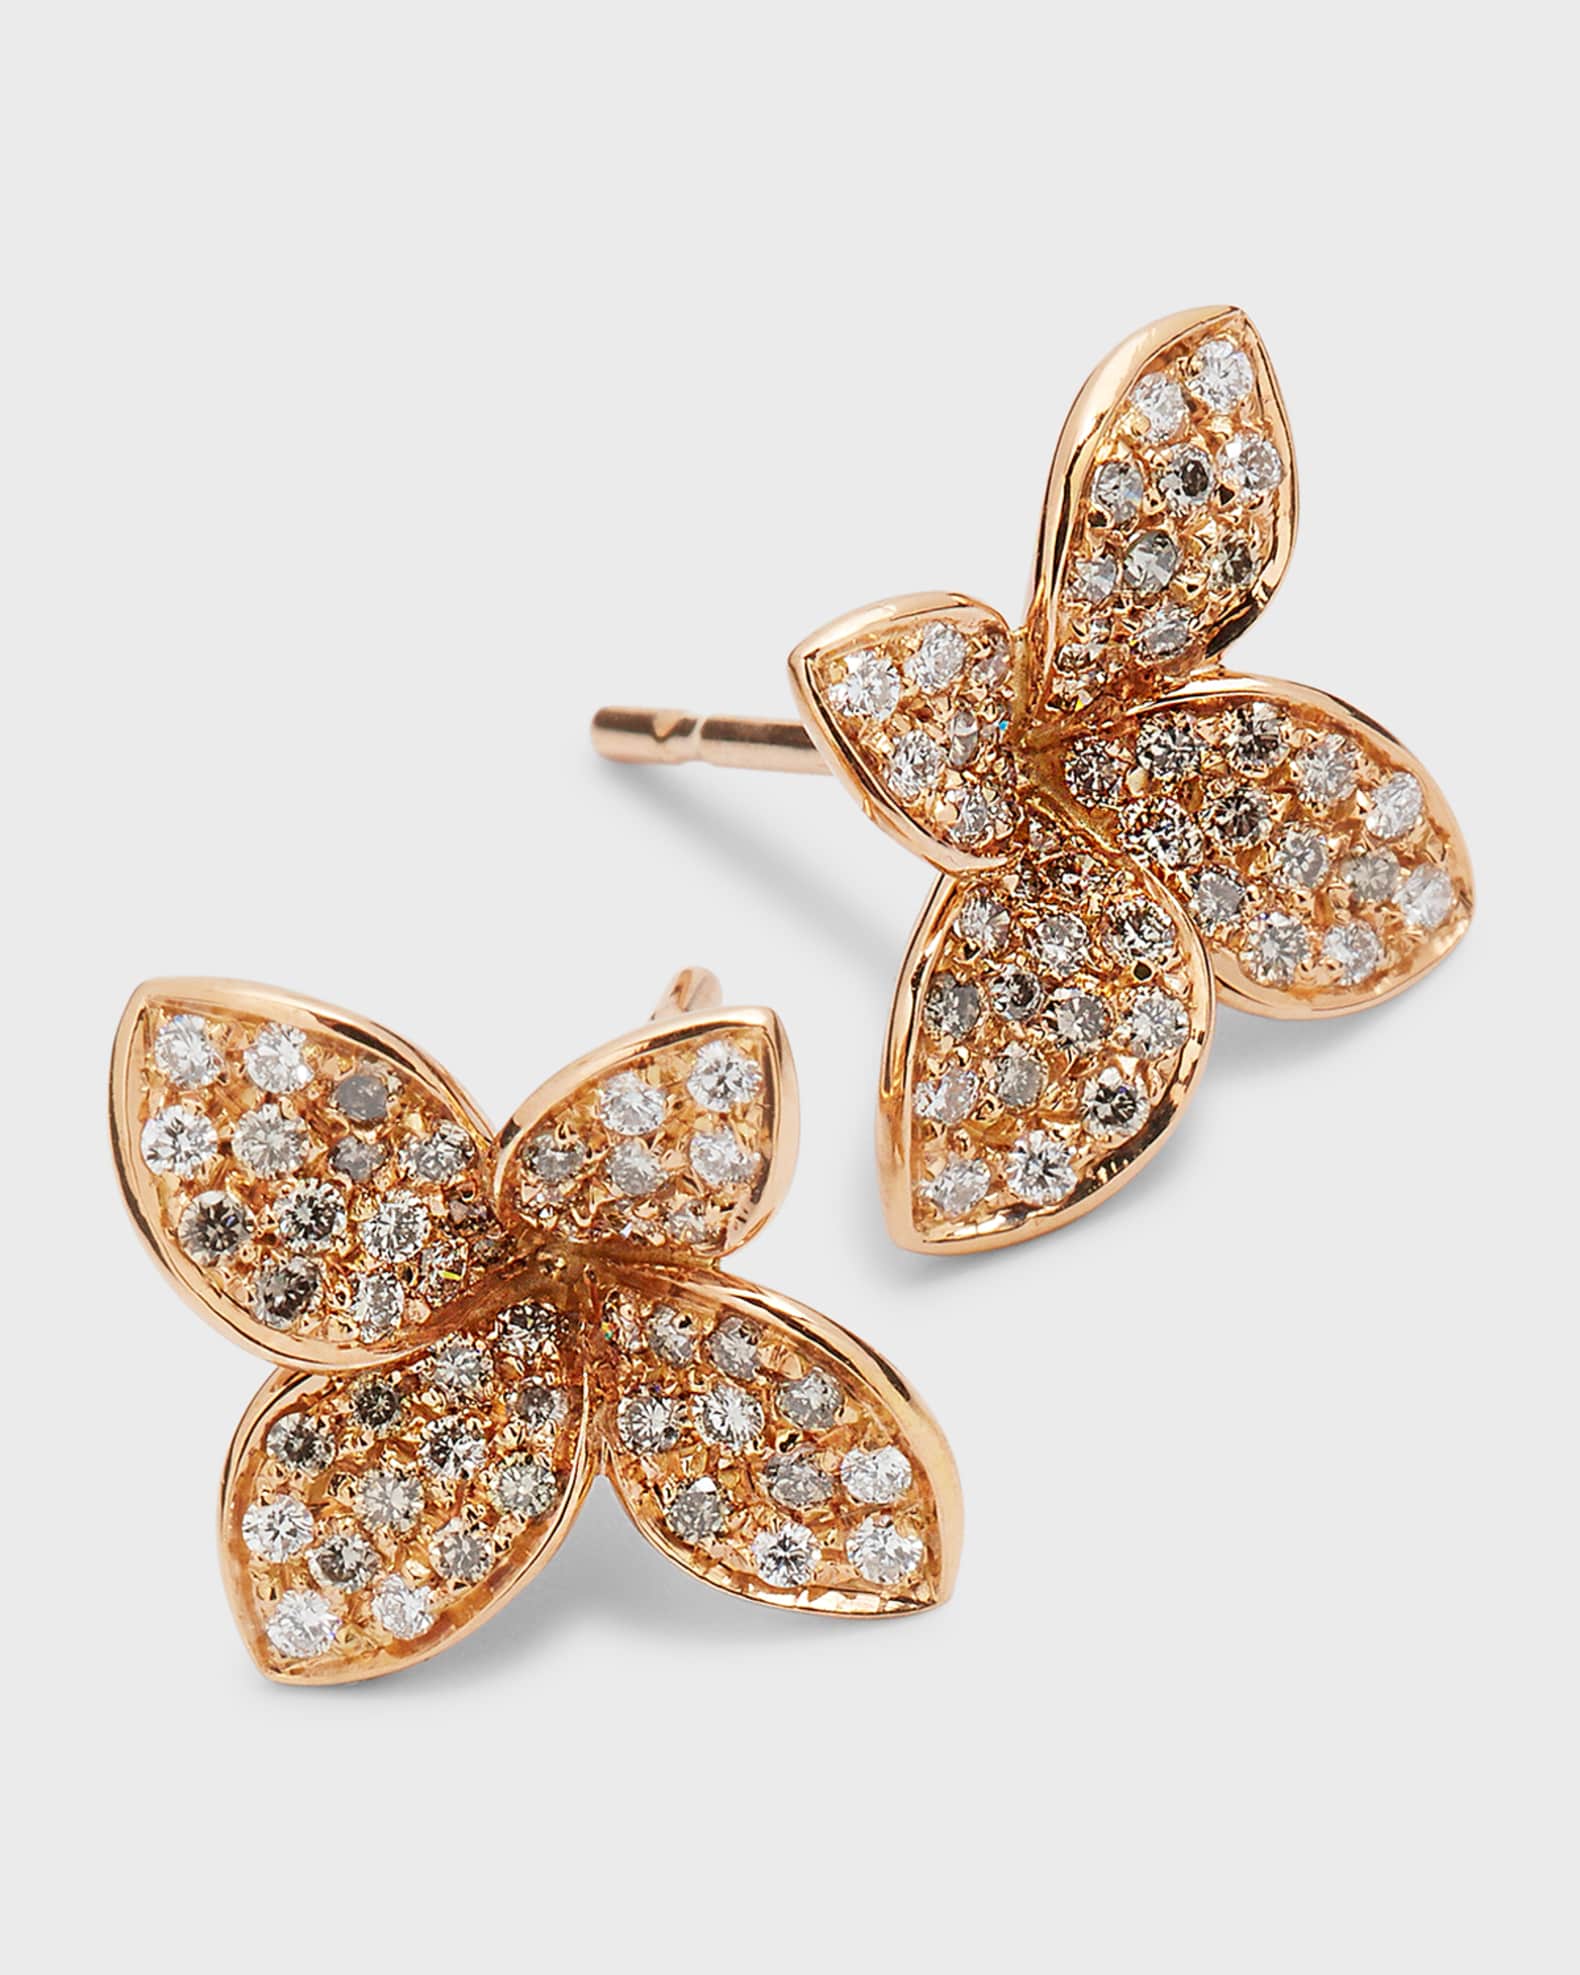 Pasquale Bruni Giardini Segreti Petite Diamond Stud Earrings in 18 Karat  Rose Gold